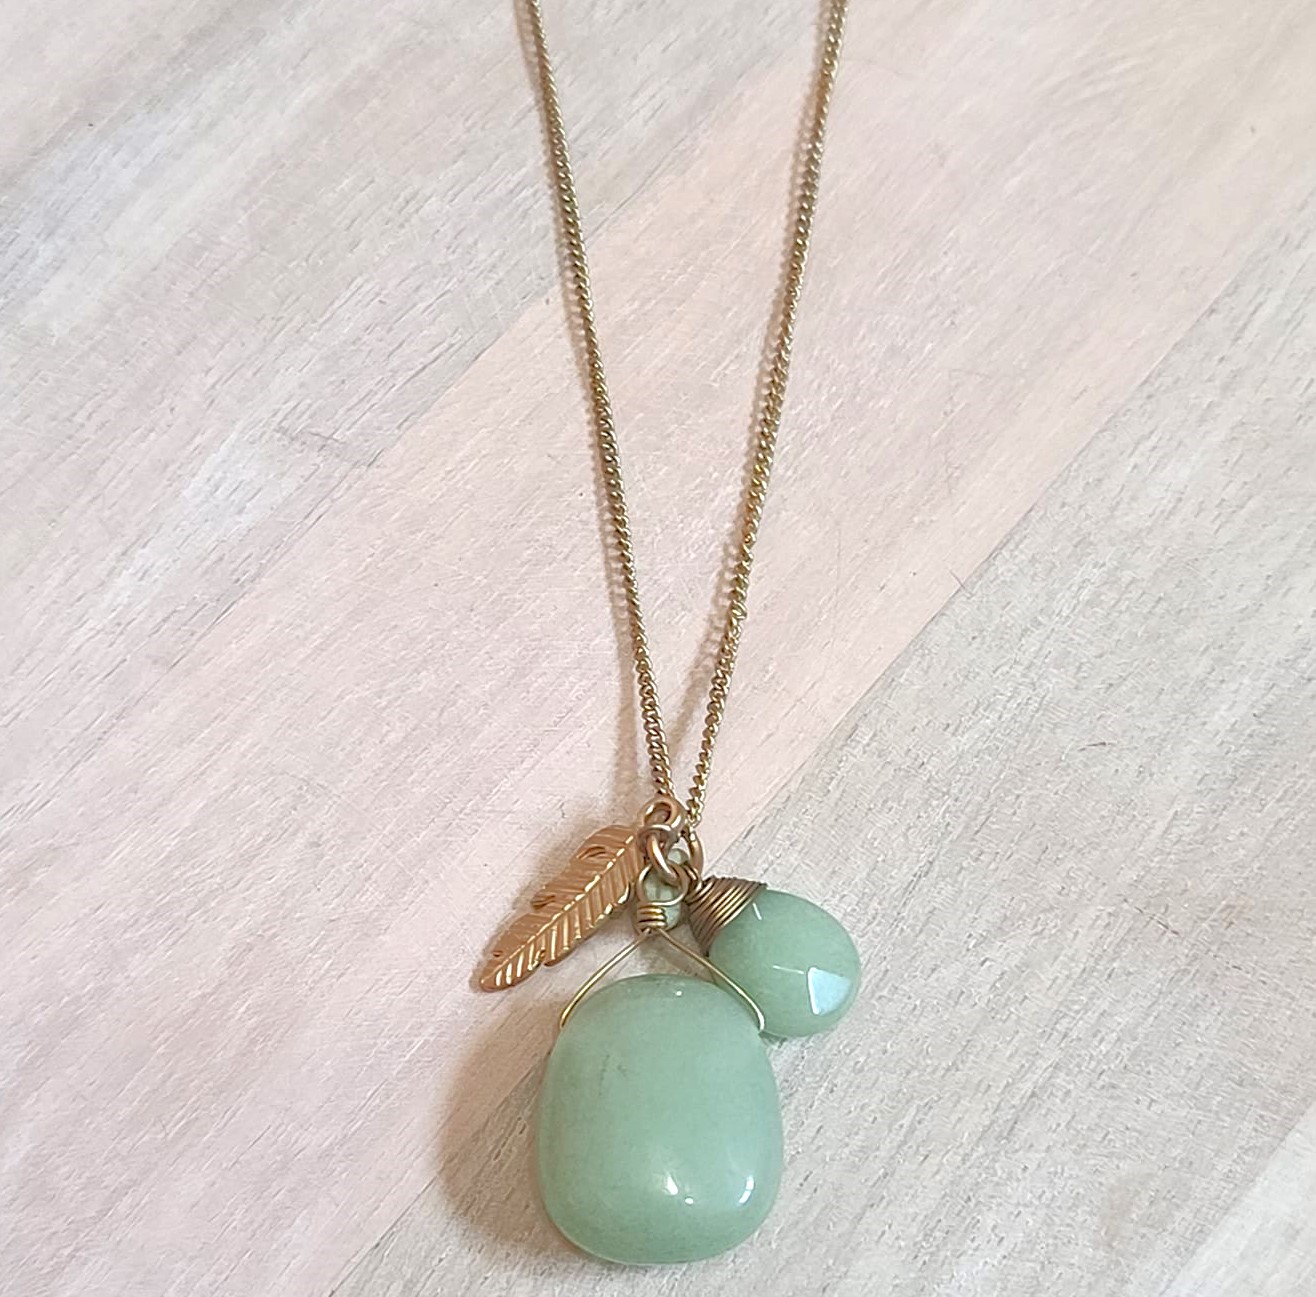 Gemstone pendant necklace, jade gemstone pendant, with feather charm, necklace